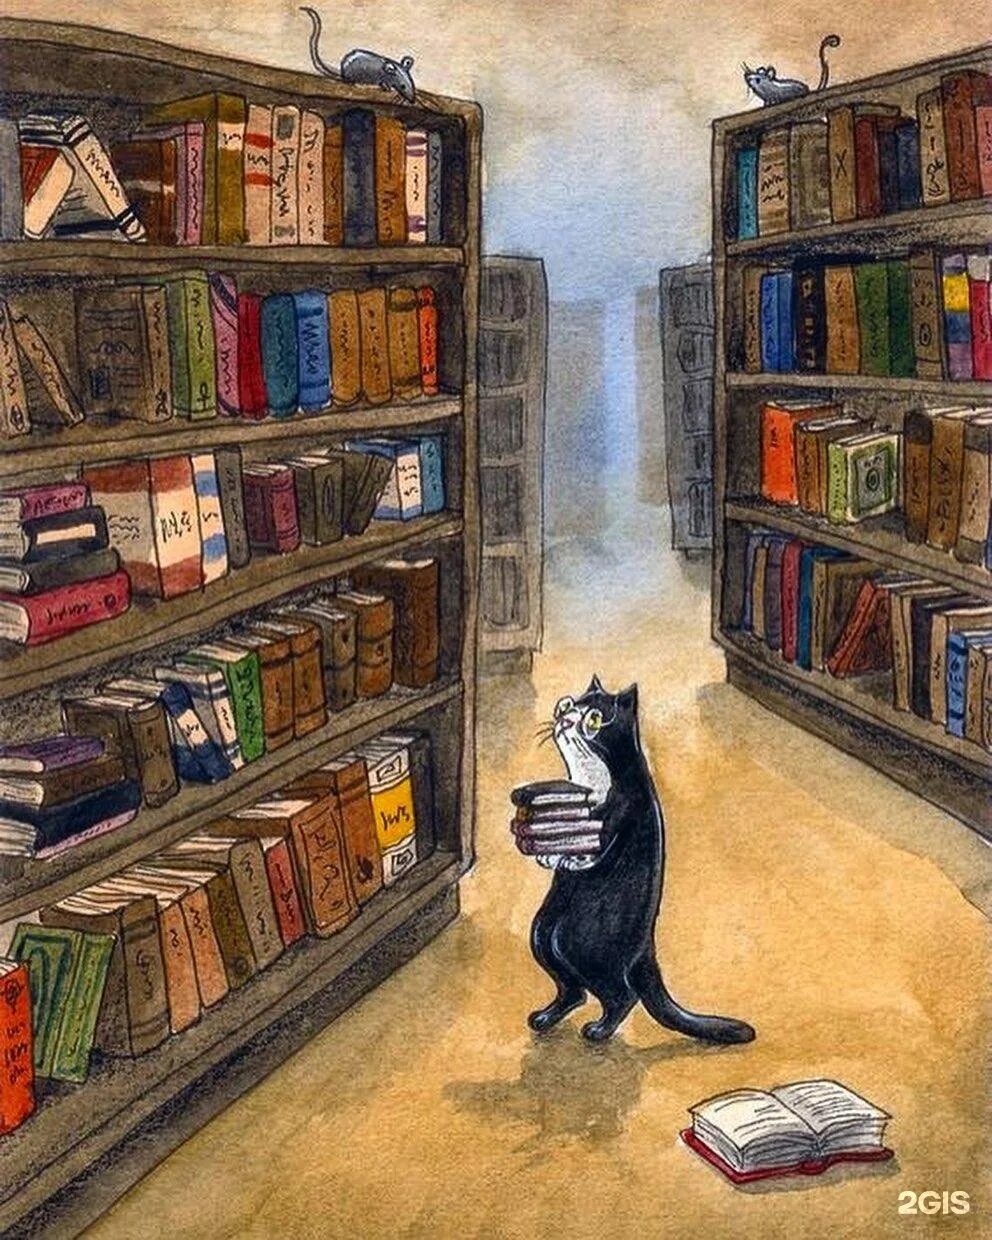 Сказка о библиотеке ночью. Кот в библиотеке. Котик в библиотеке. Полки для книг.